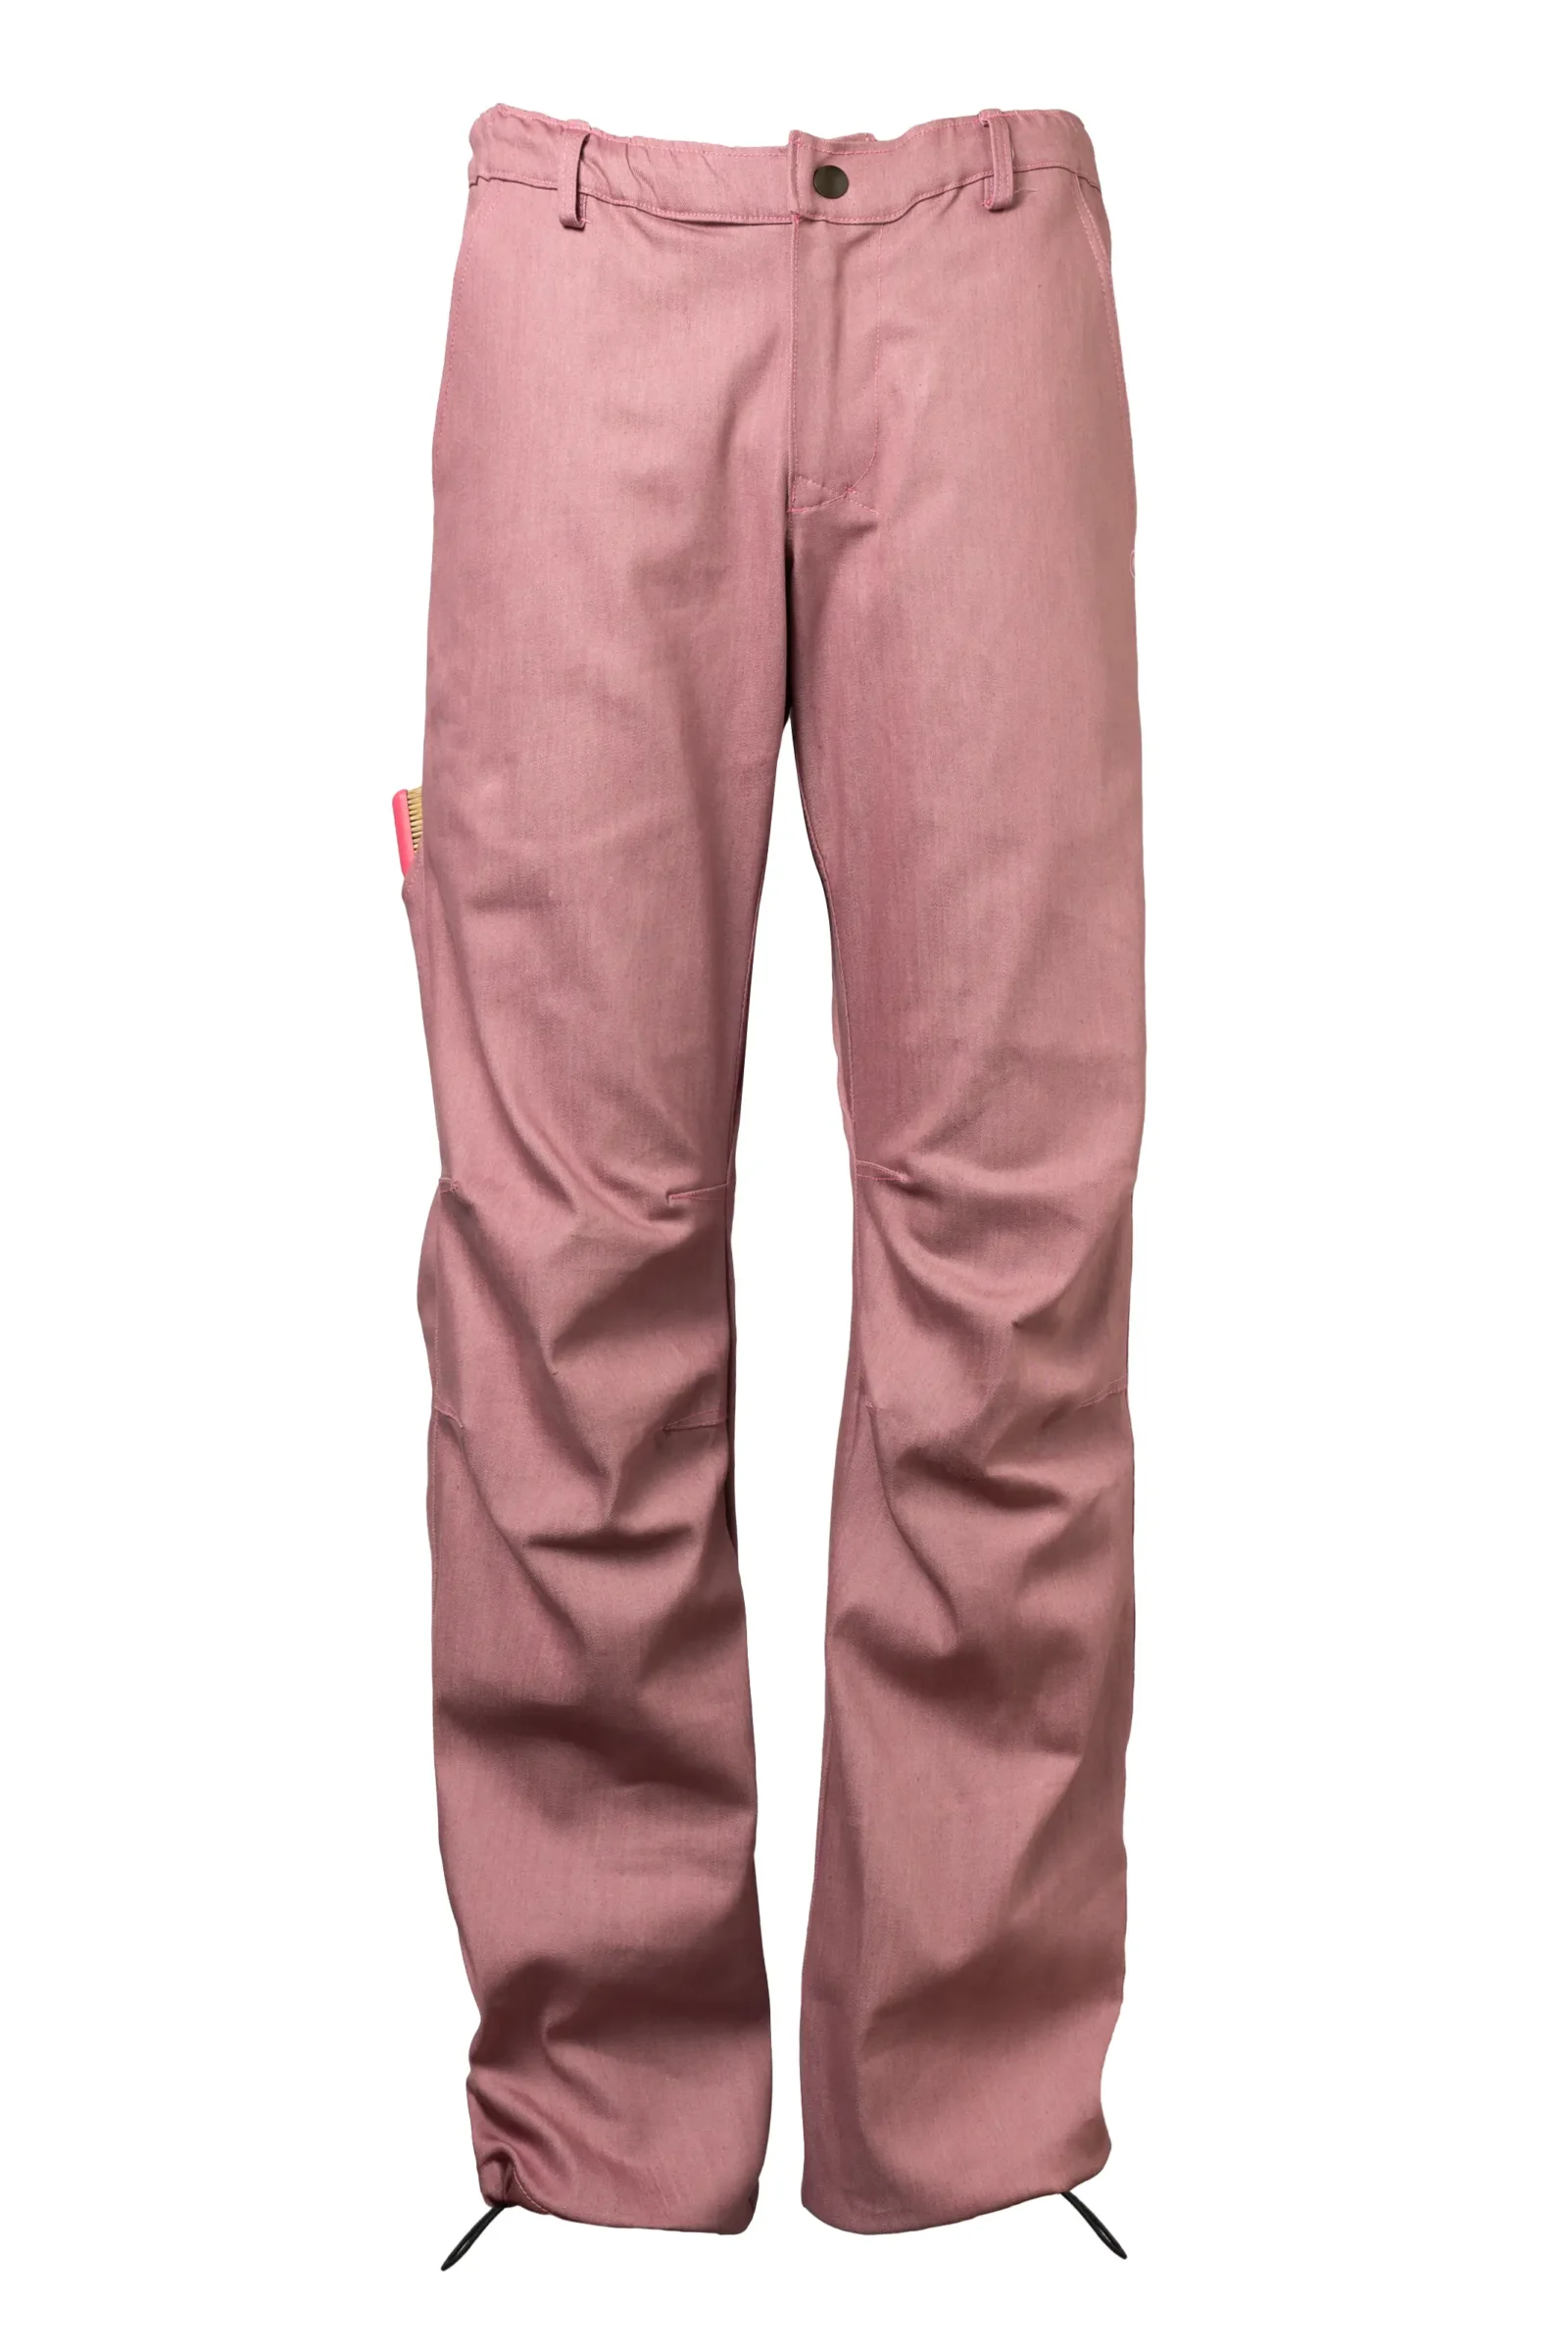 Men's climbing jeans - pink denim - BILLY 2 MONVIC